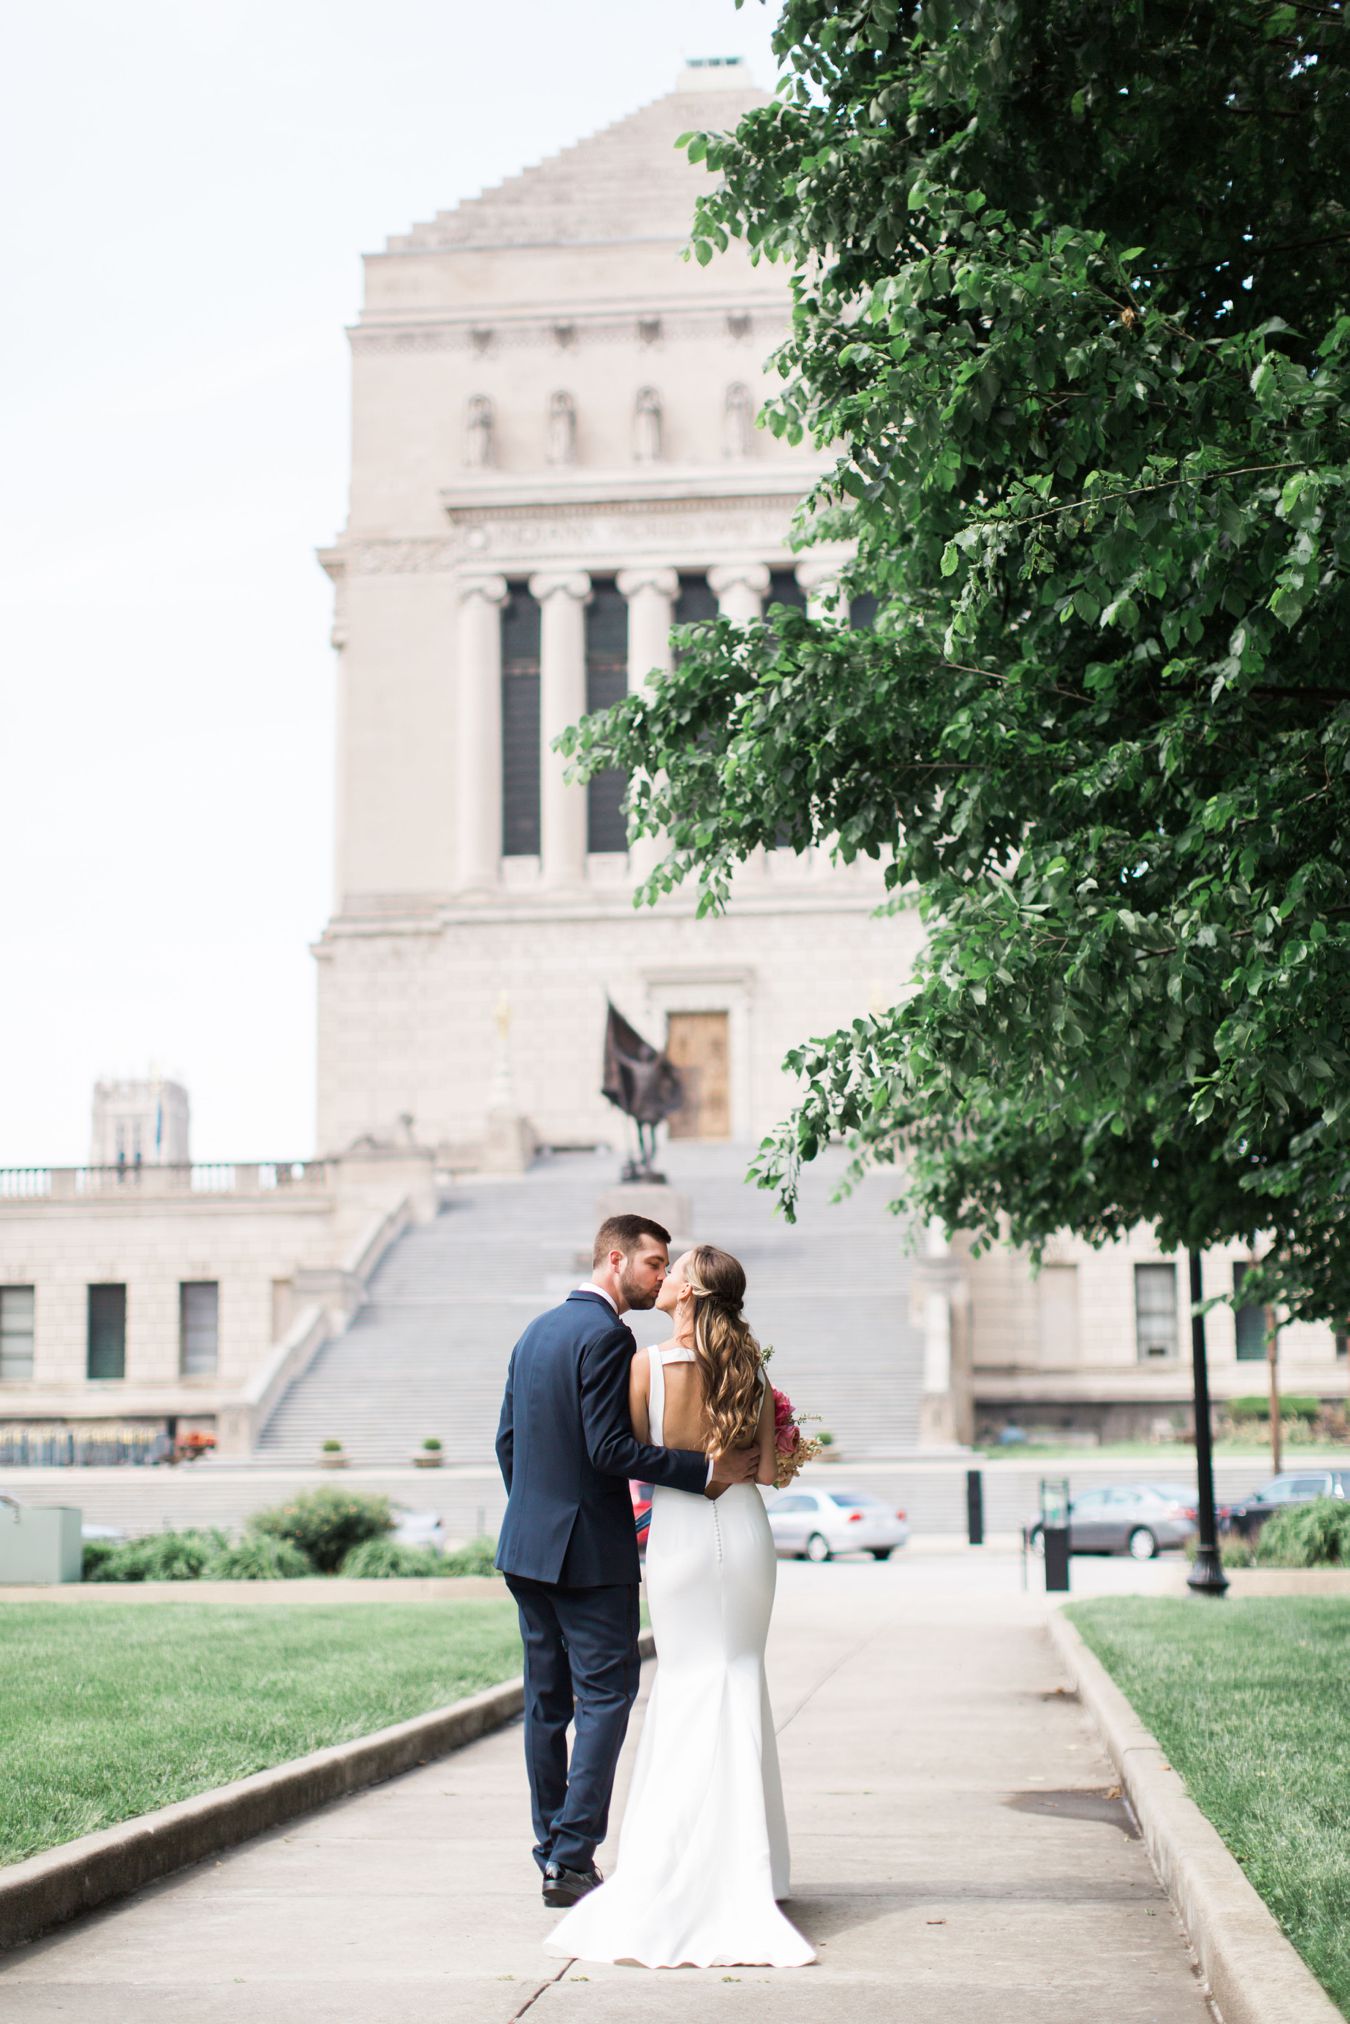 Indianapolis Wedding Photography | Cory Weber Photography 